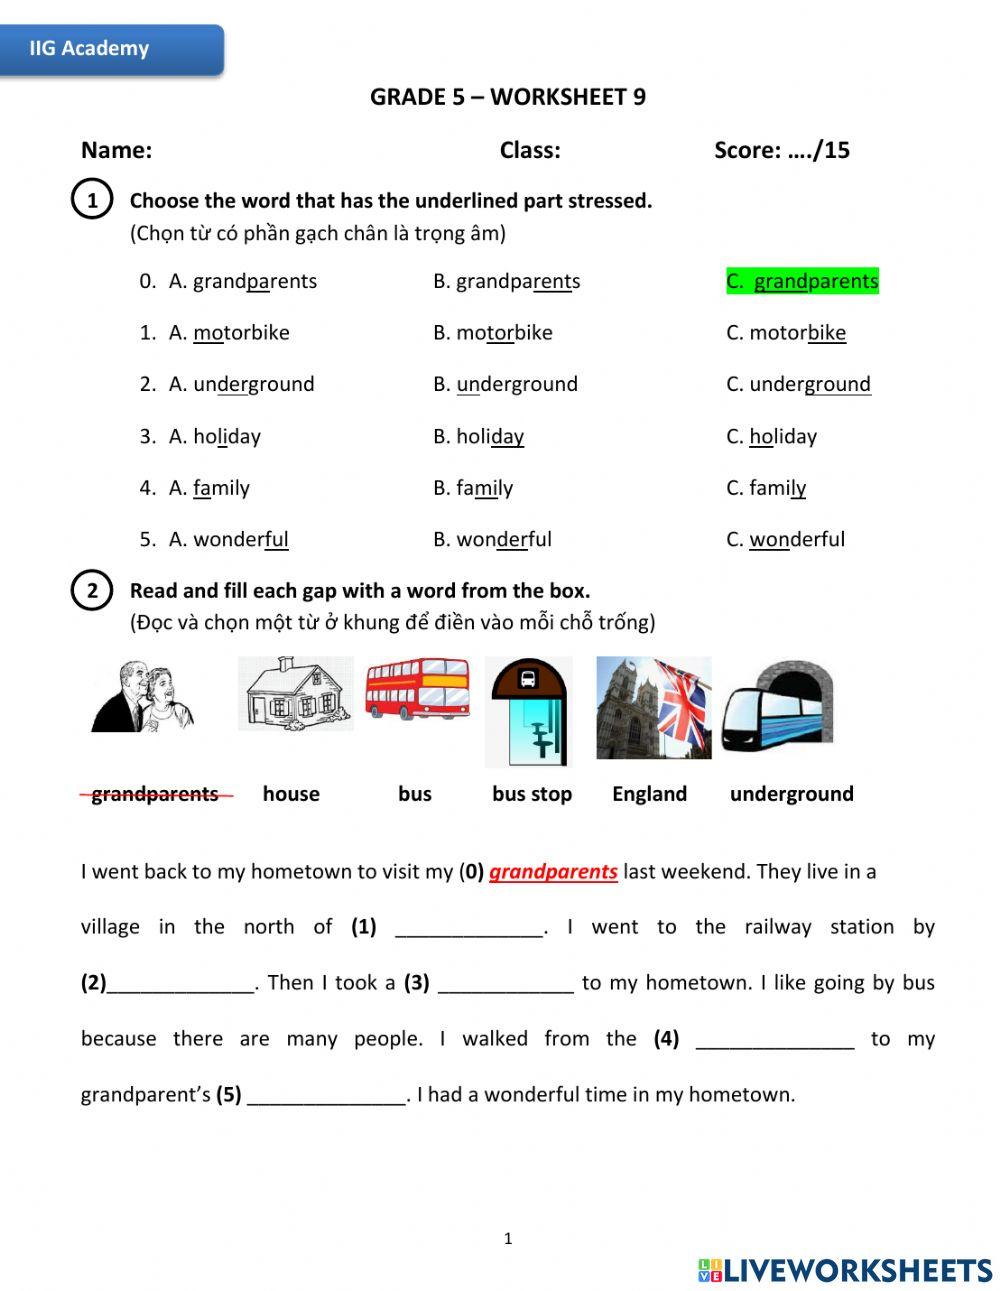 IIG-Grade 5-Worksheet 9